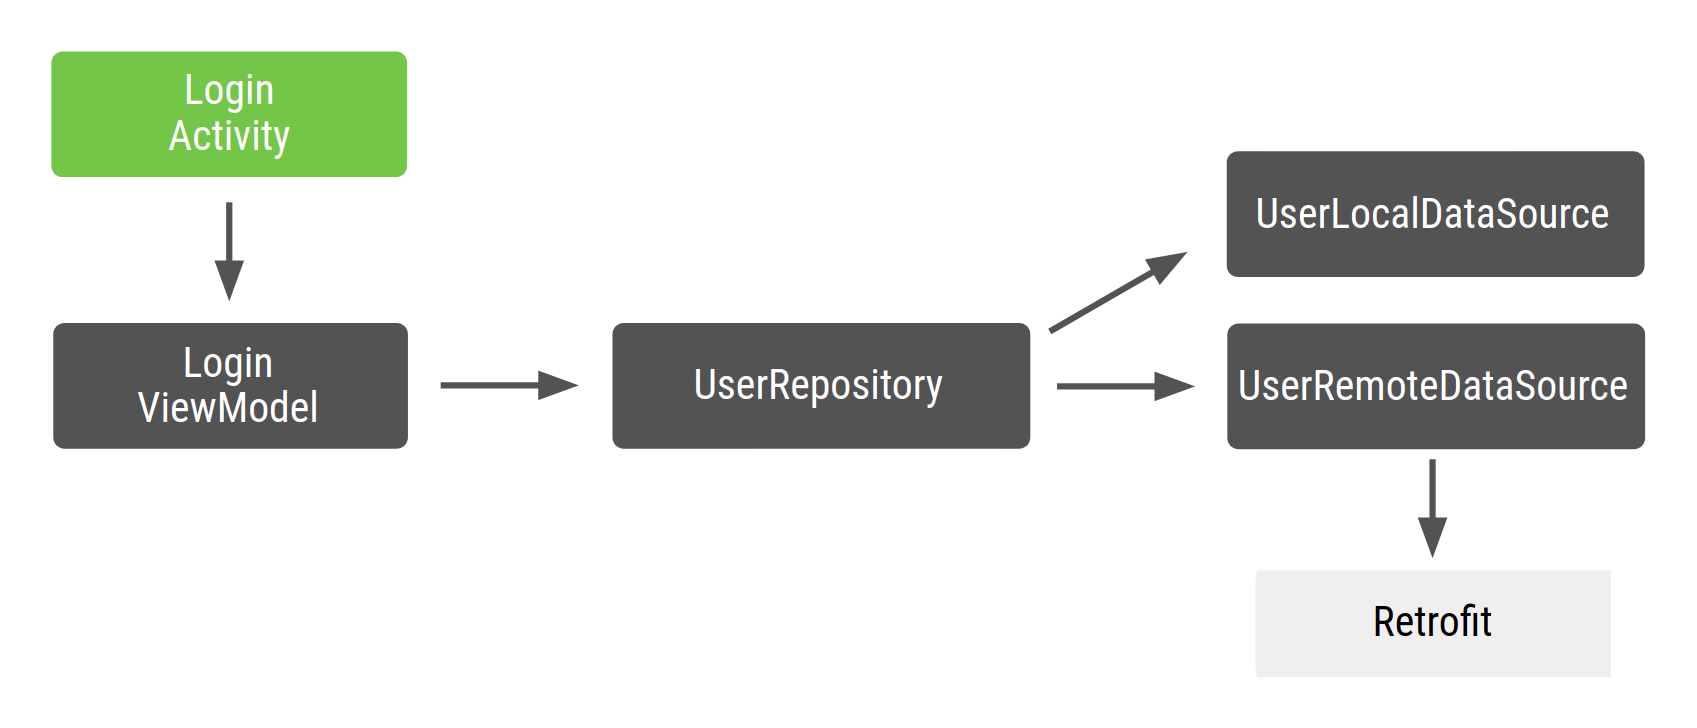 LoginActivity는 LoginViewModel에 종속되며, 이 클래스는 다시 UserRepository에 종속되고, 이 클래스는 다시 UserLocalDataSource 및 UserRemoteDataSource에 종속되며, 이는 다시 Retrofit에 종속됩니다.